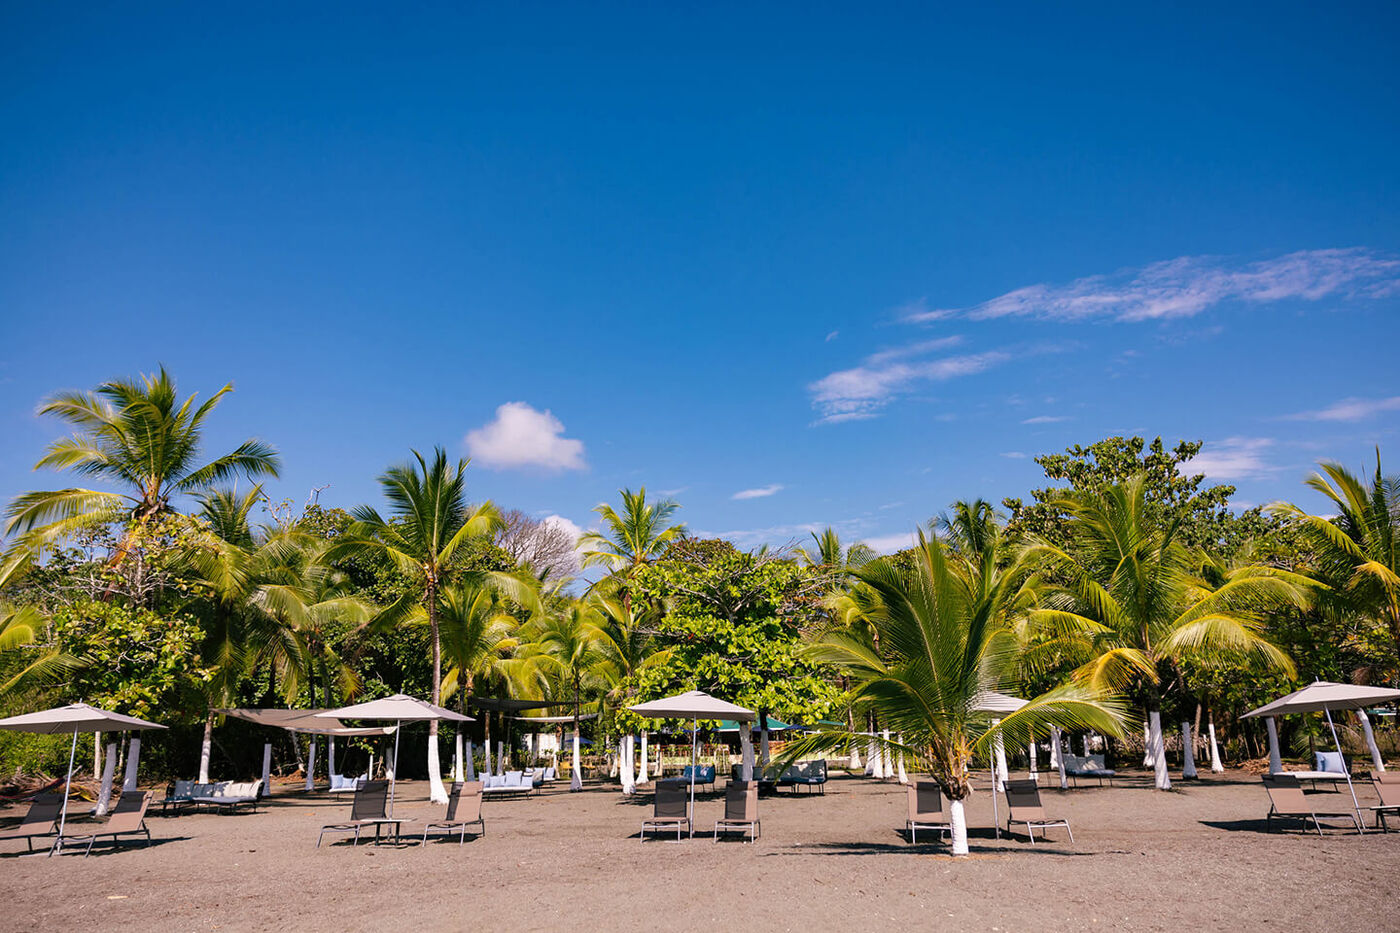 Cahui beach club with loungers, umbrellas, trees